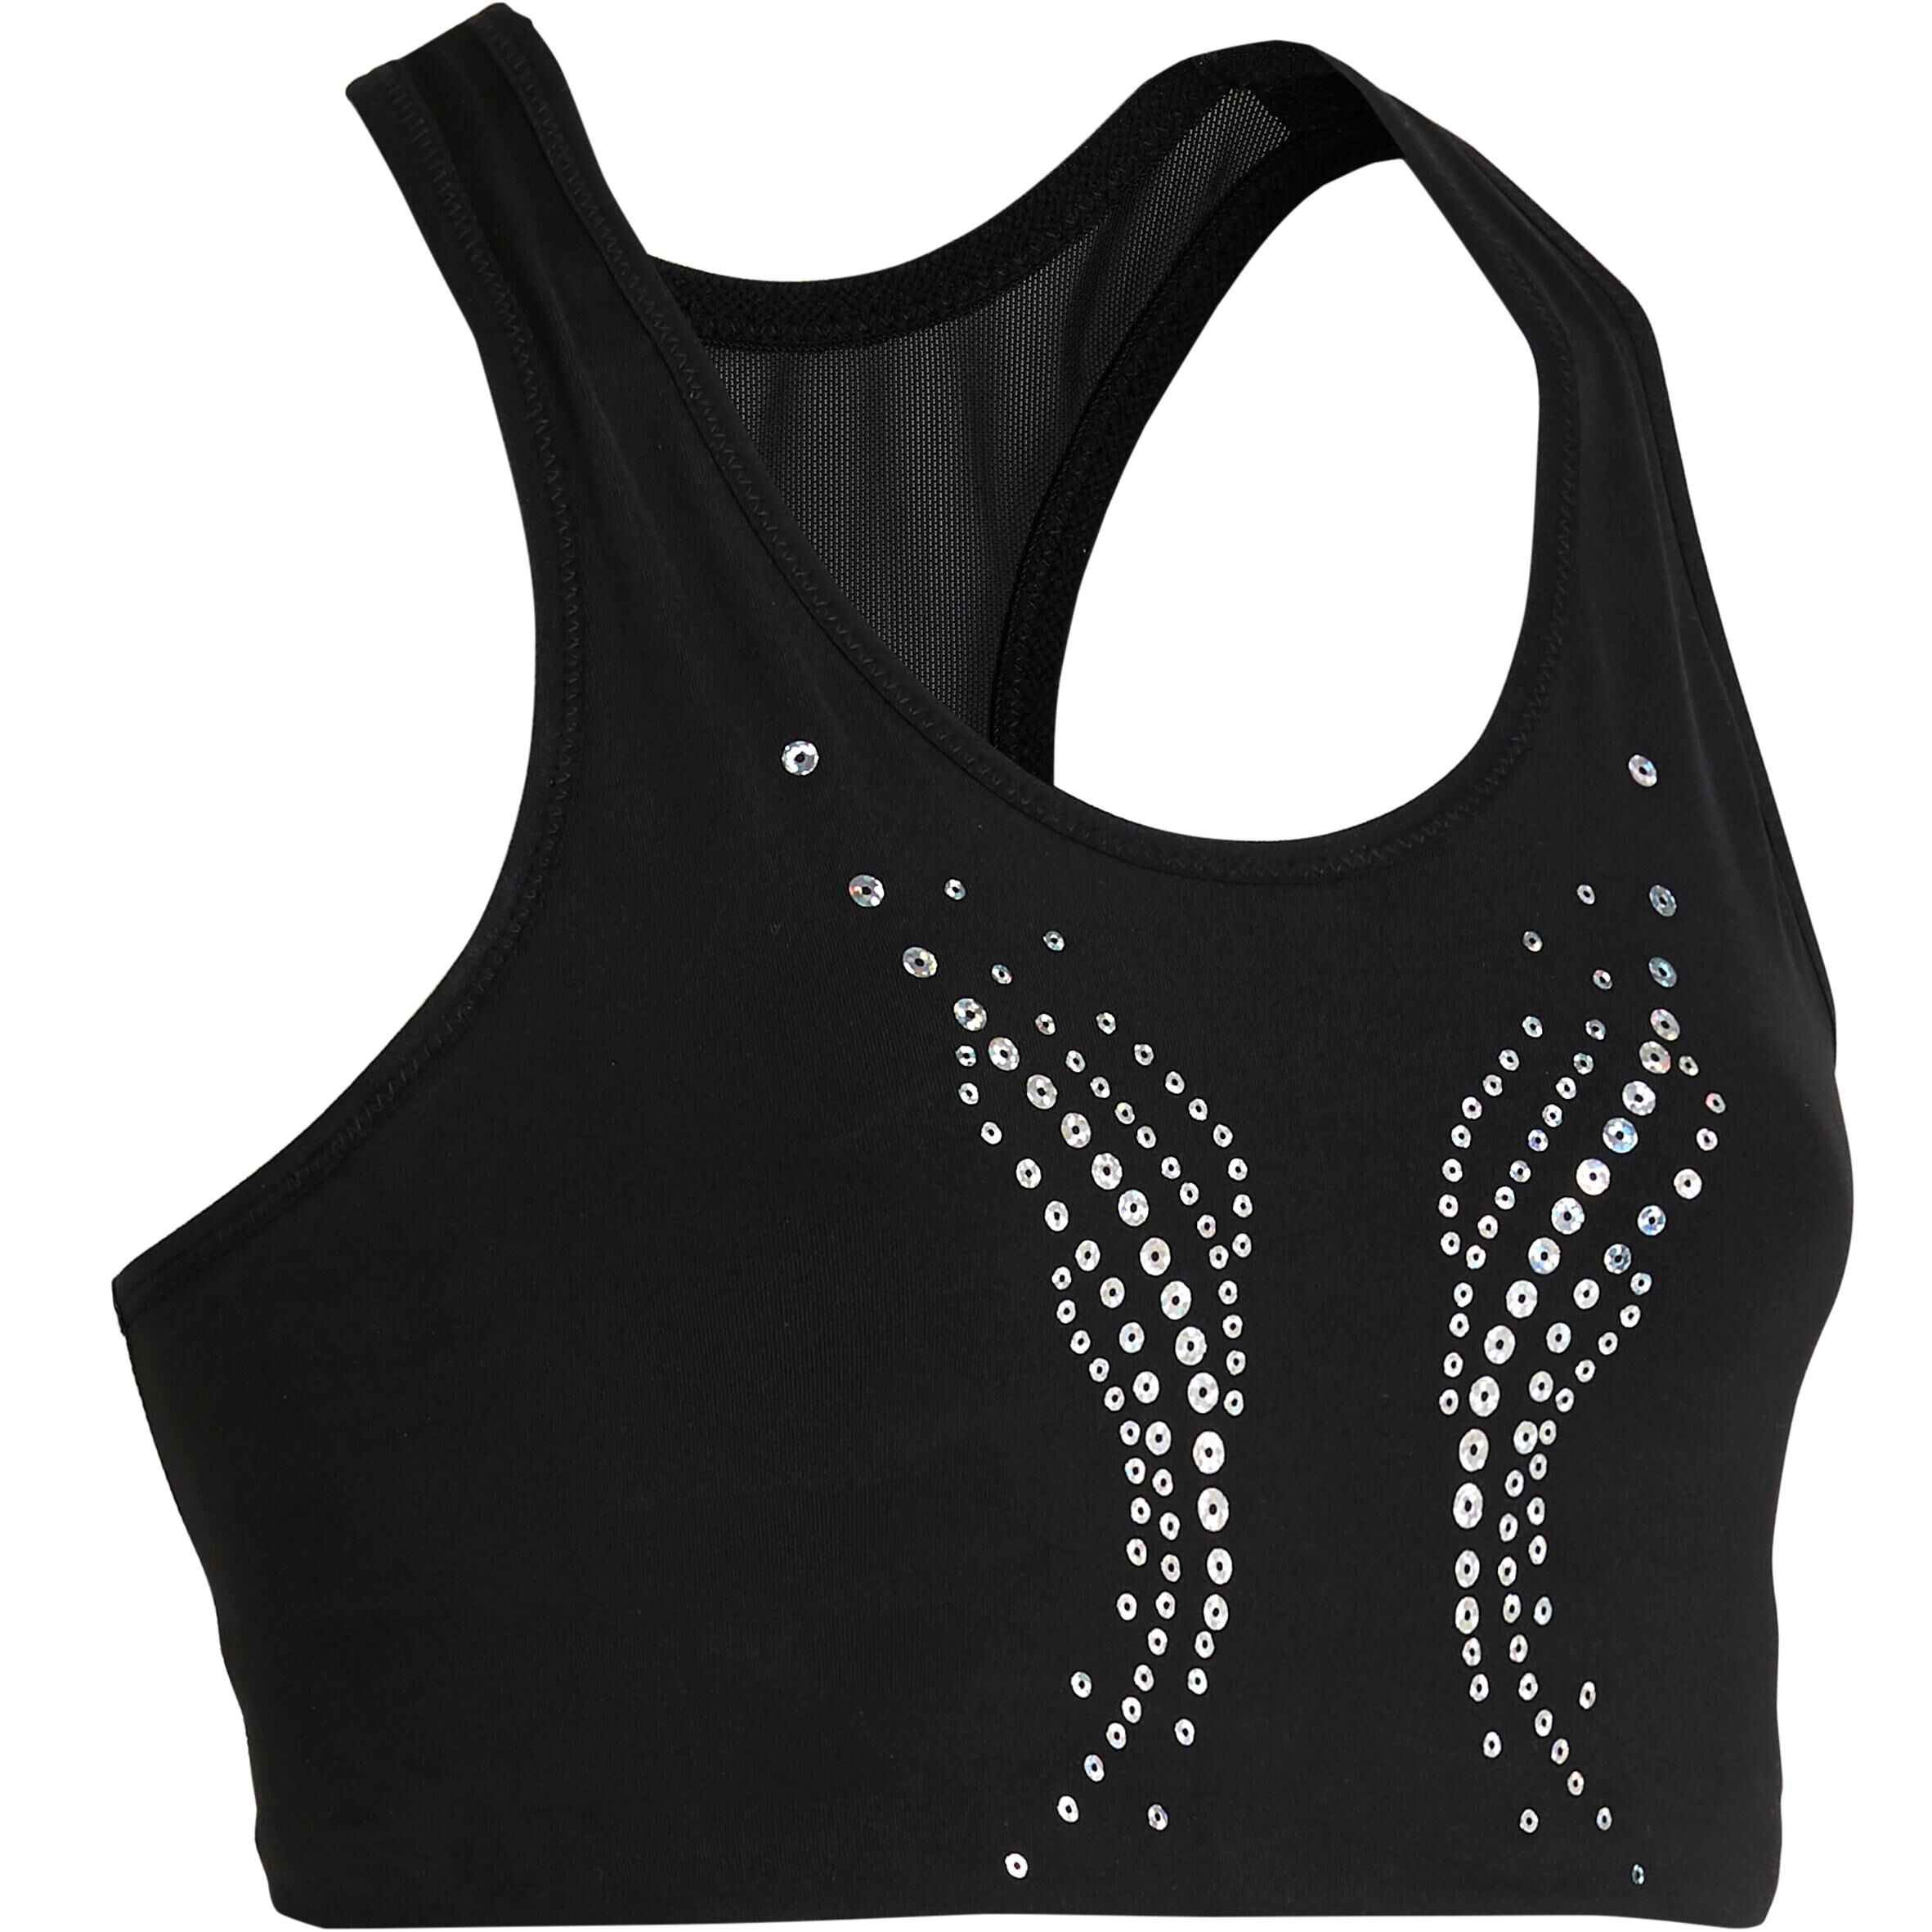 DOMYOS Women's Artistic and Rhythmic Gymnastics Crop Top - Black/Sequins